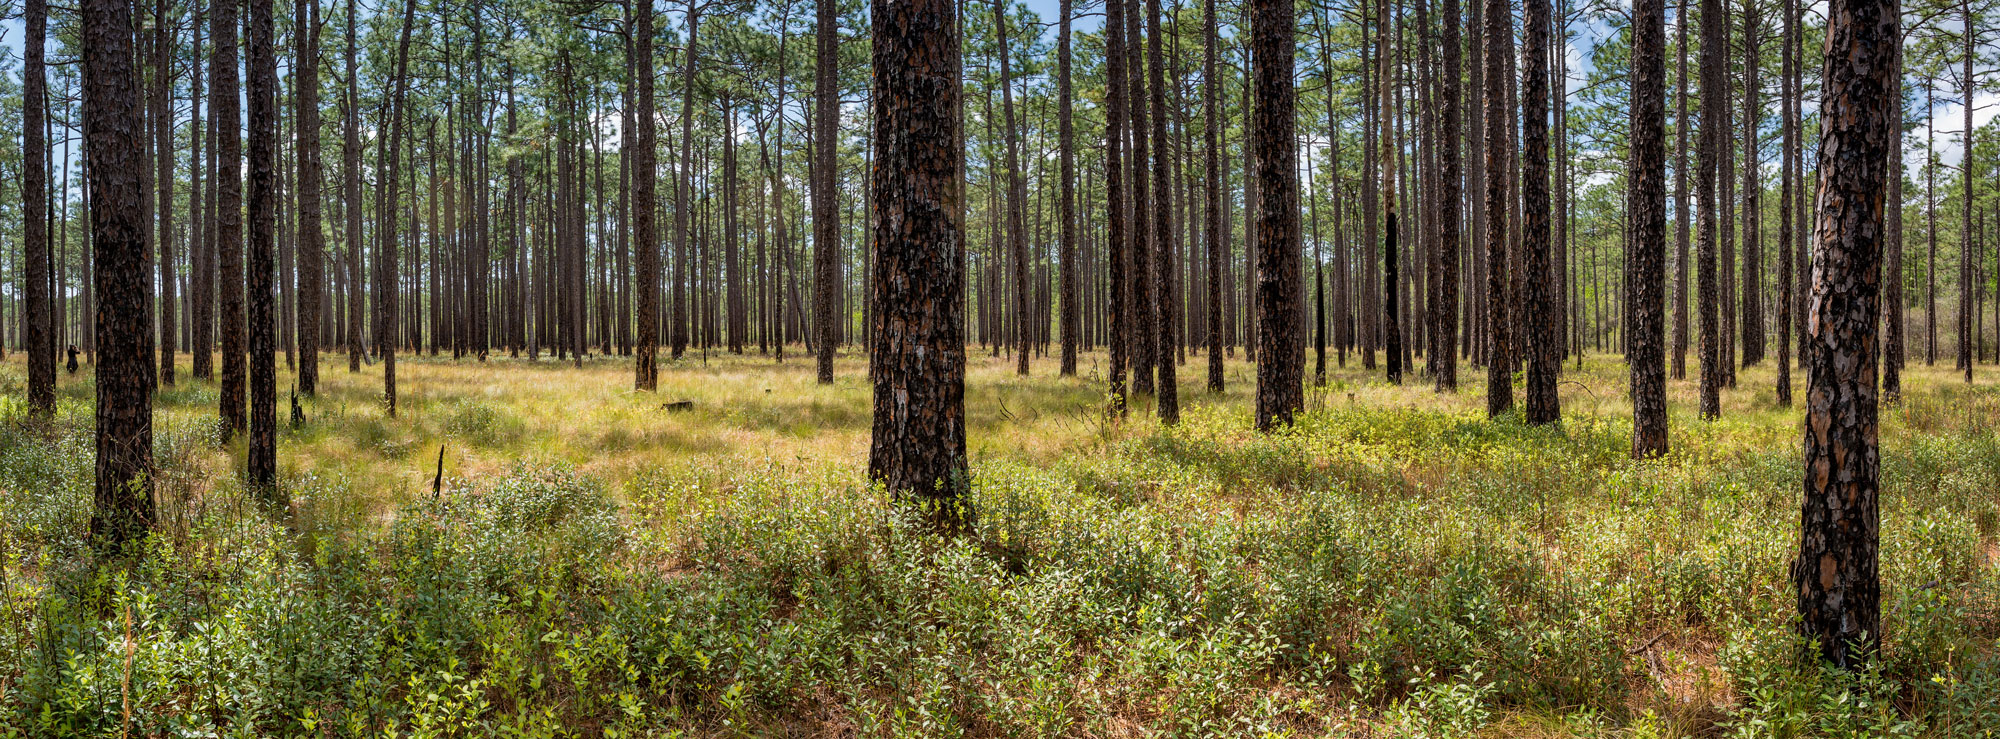 Longleaf pine forest